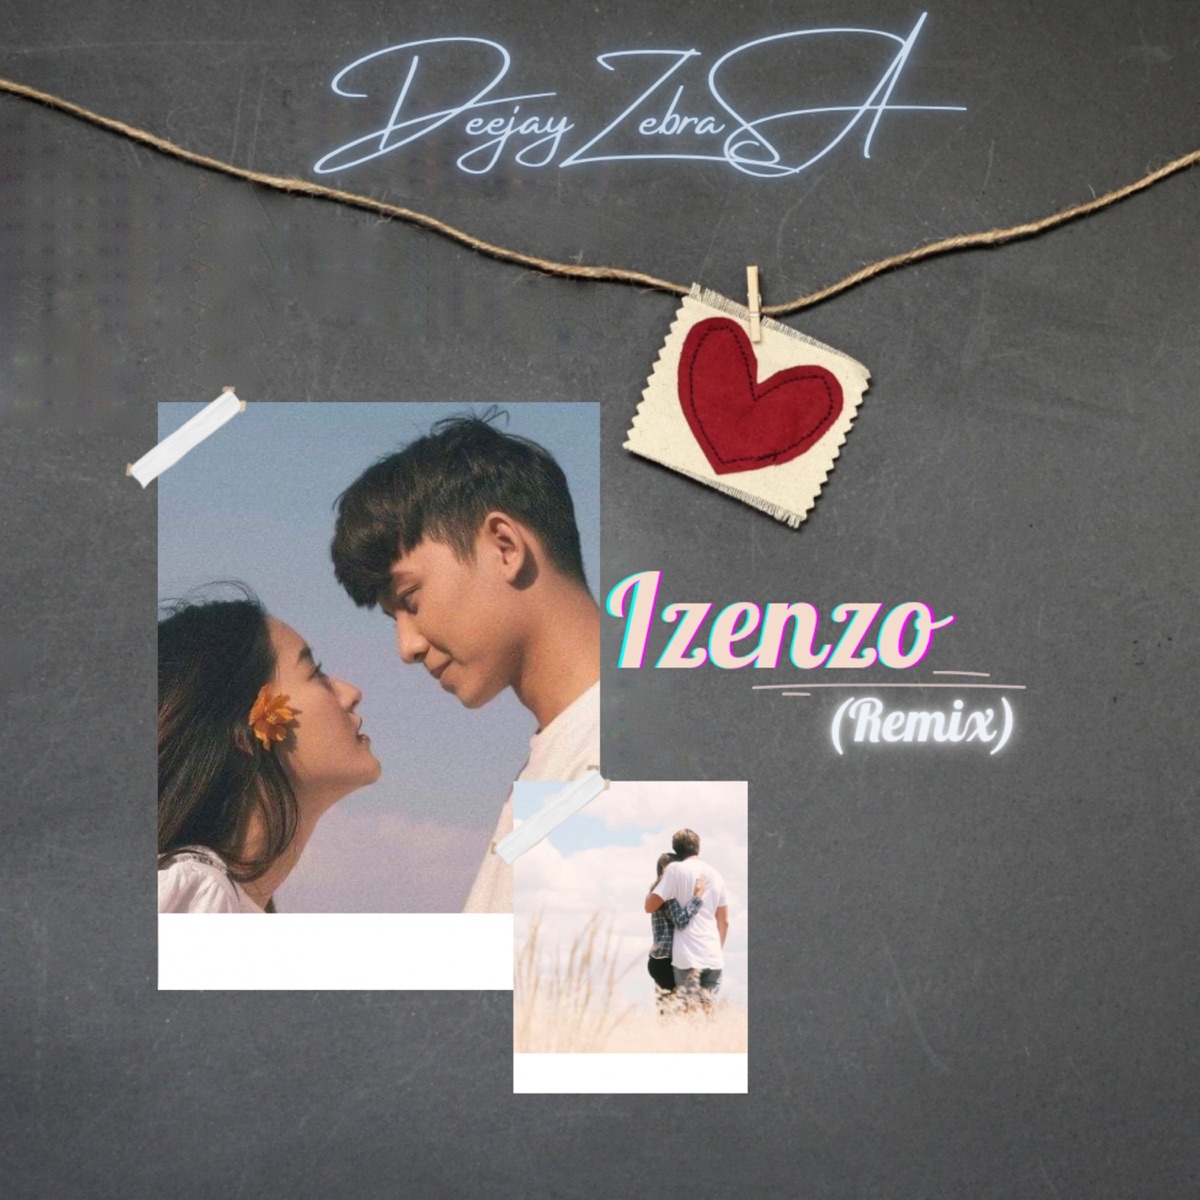 MP3: Deejay Zebra SA – Izenzo (Remix)